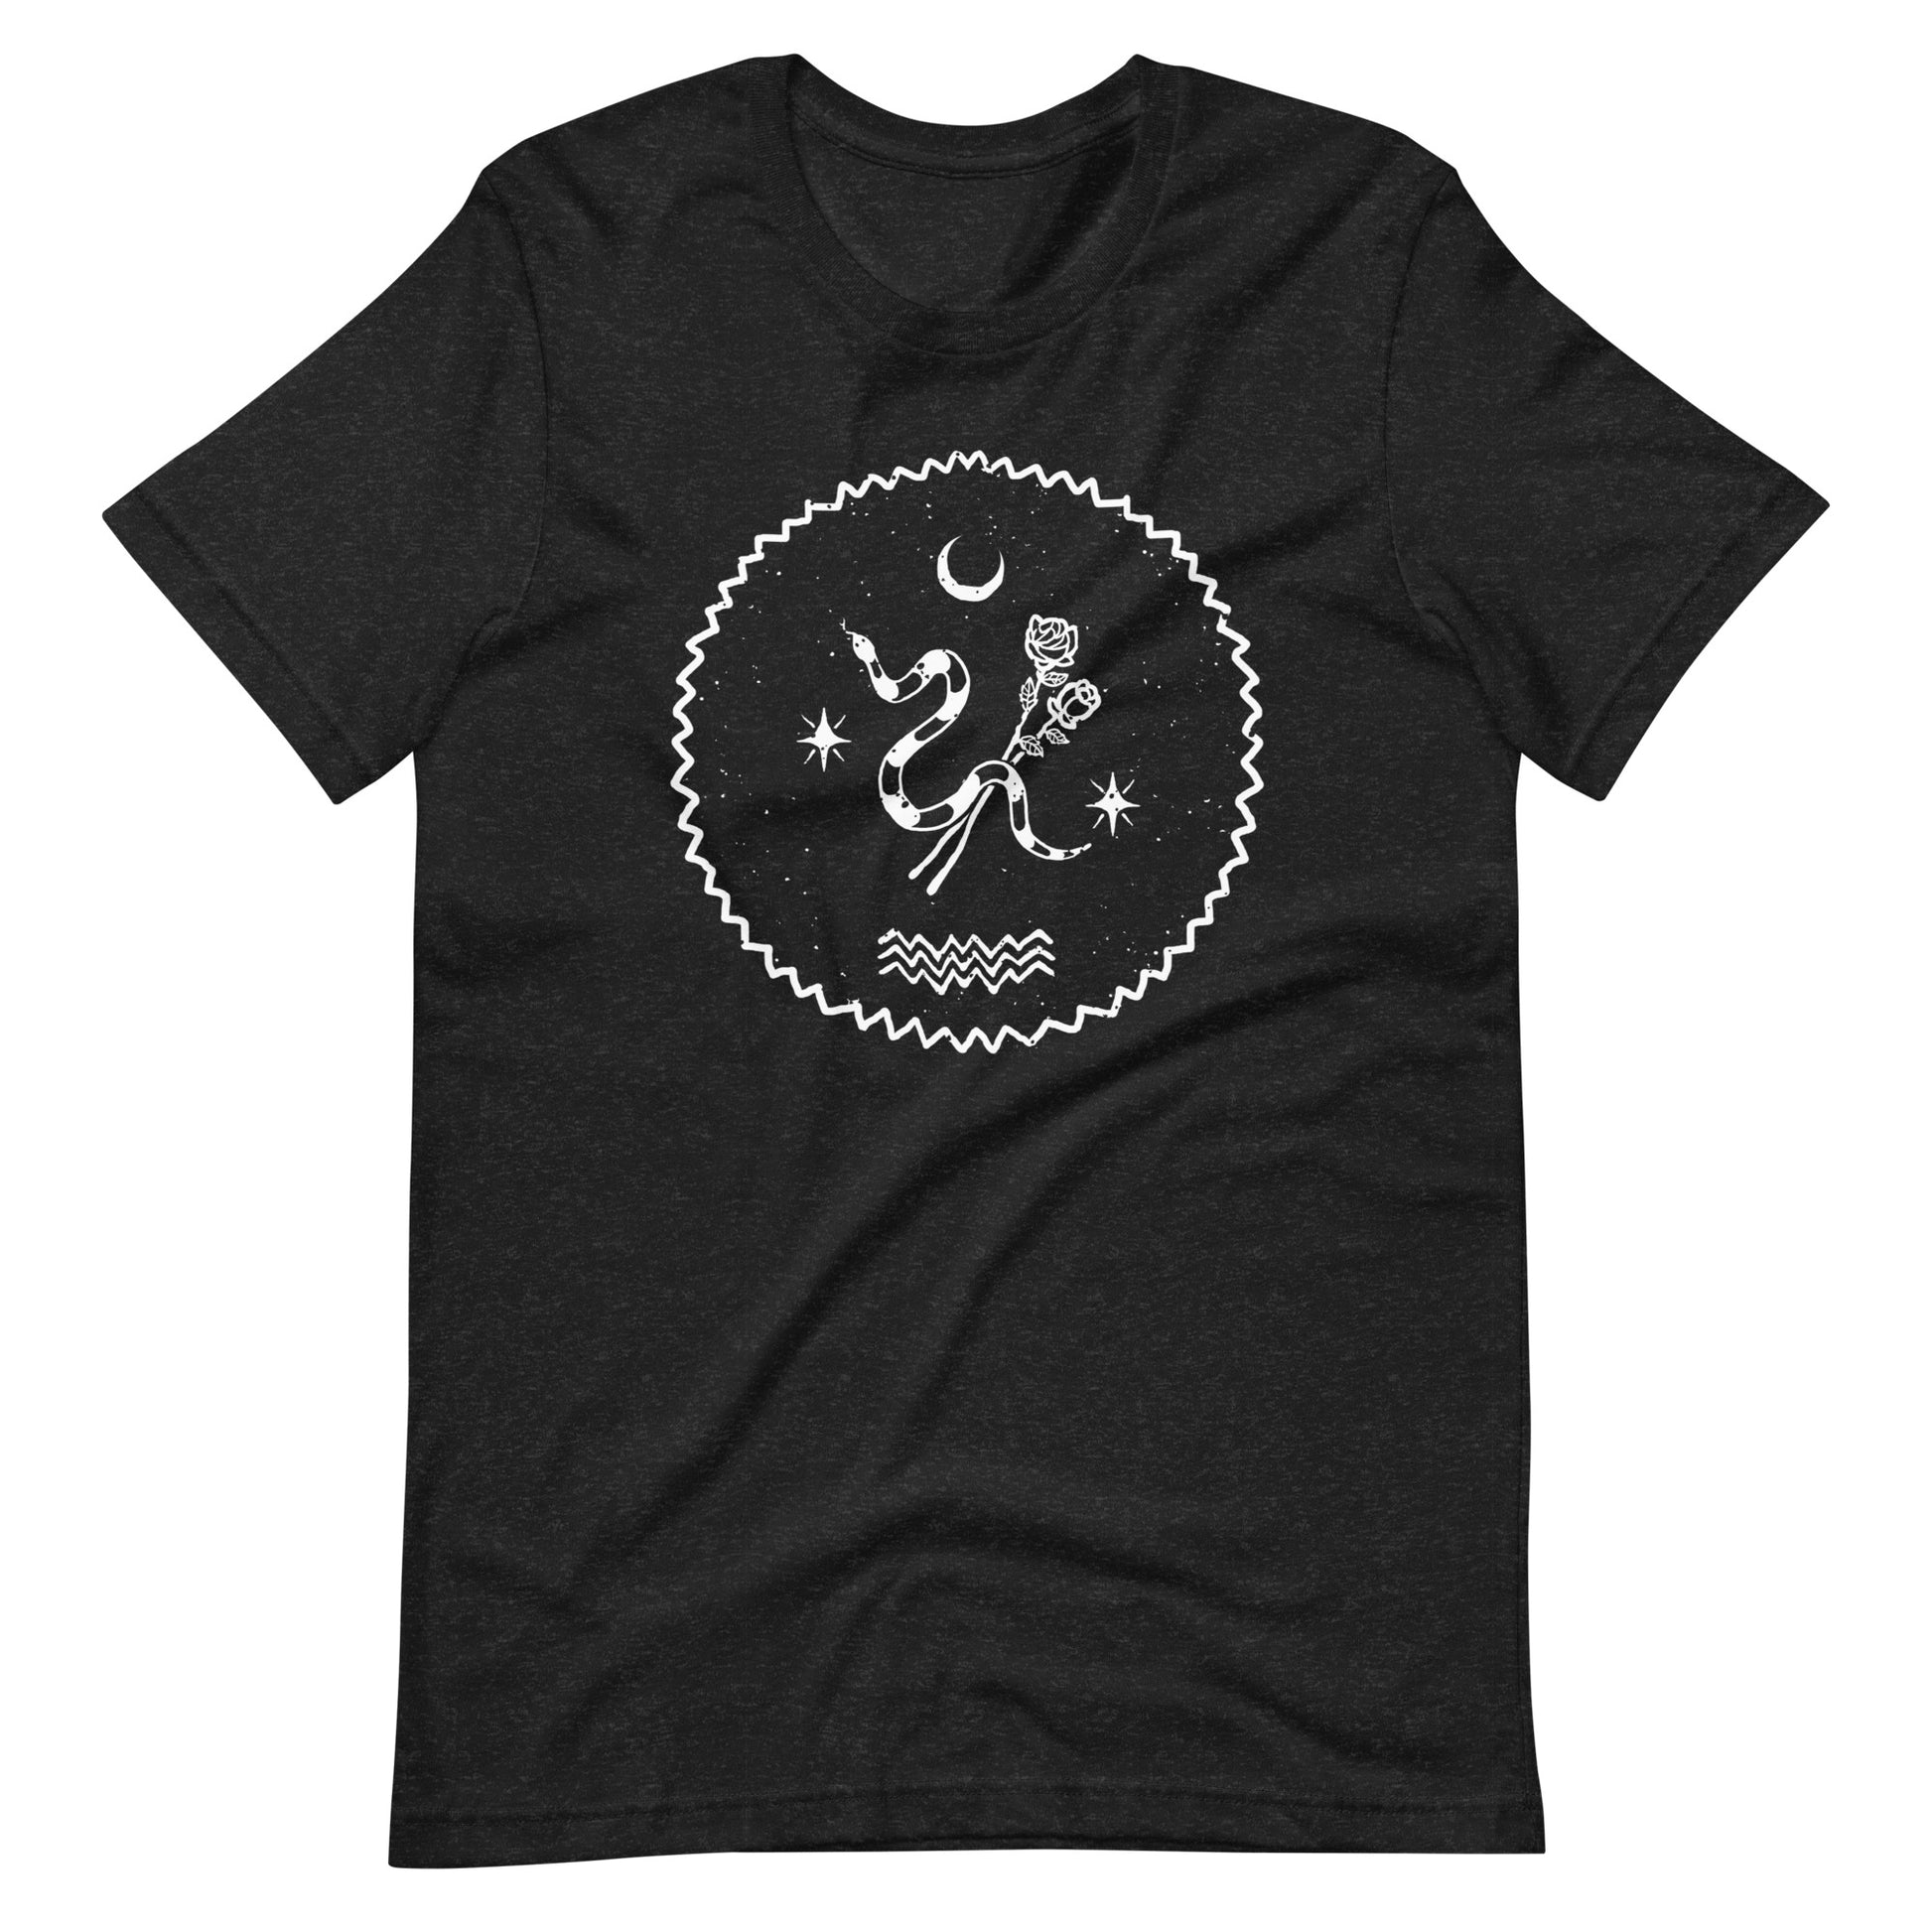 Scented Poison - Men's t-shirt - Black Heather Front